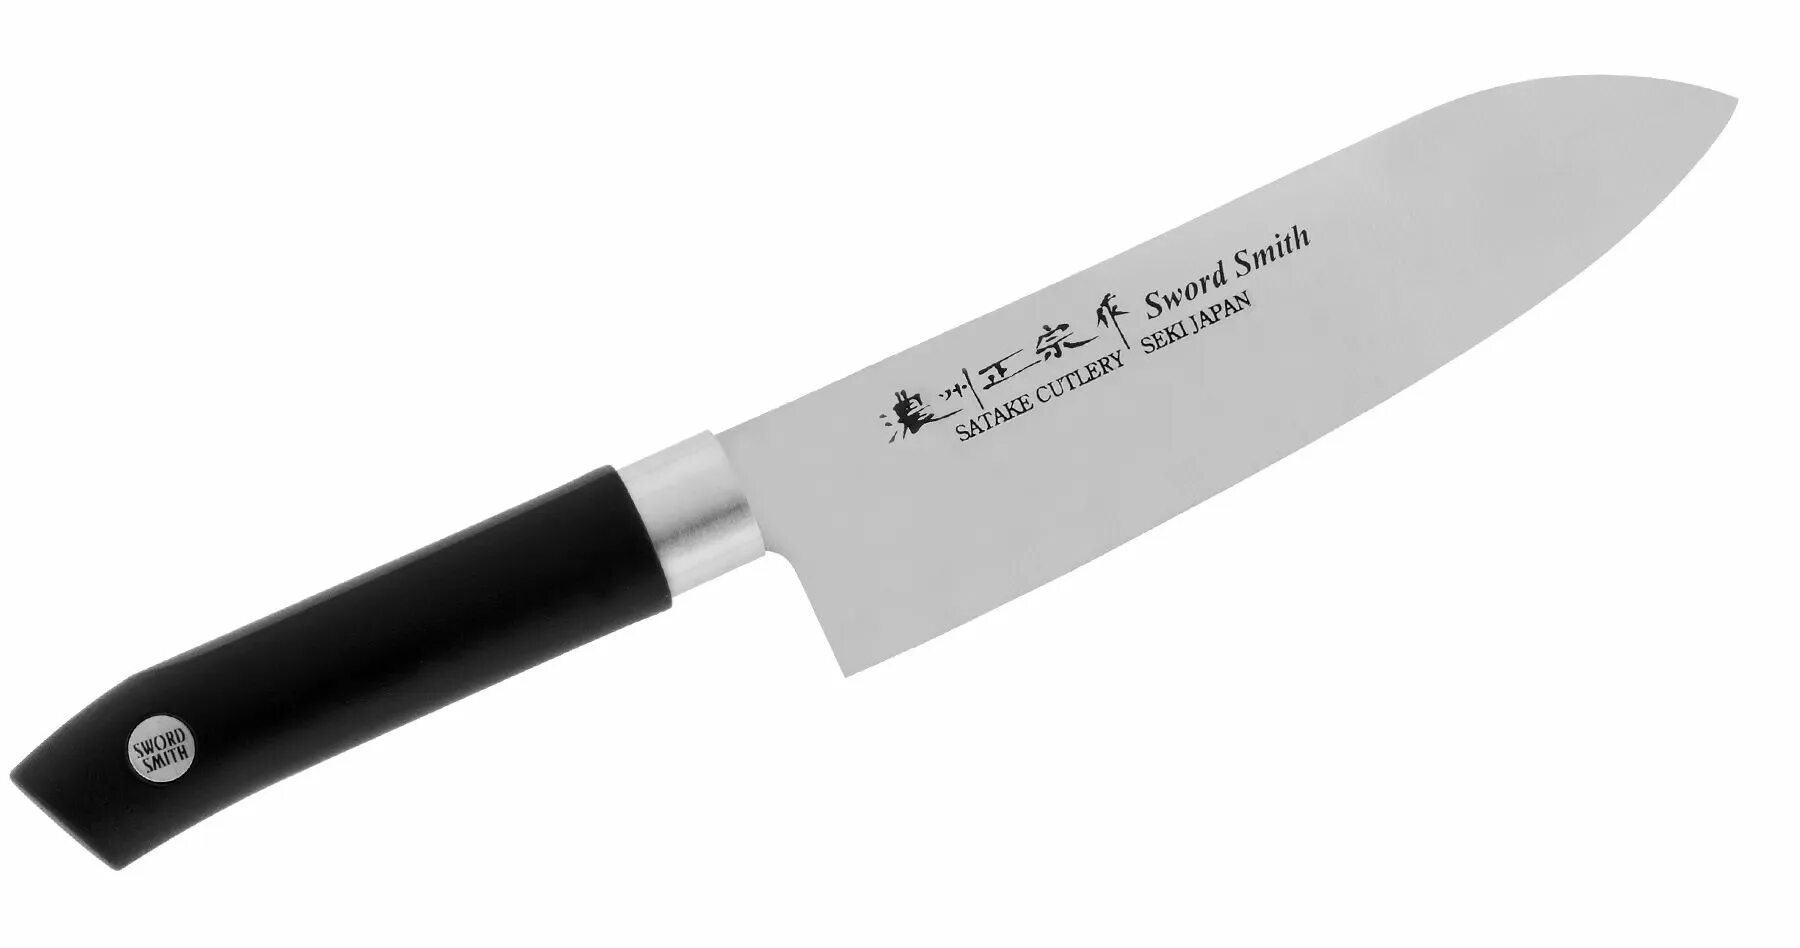 Нож Satake Sakura. Набор кухонных ножей Satake swordsmith hg8323. Японский нож Sakura Sakura. Японский шеф нож сантоку.